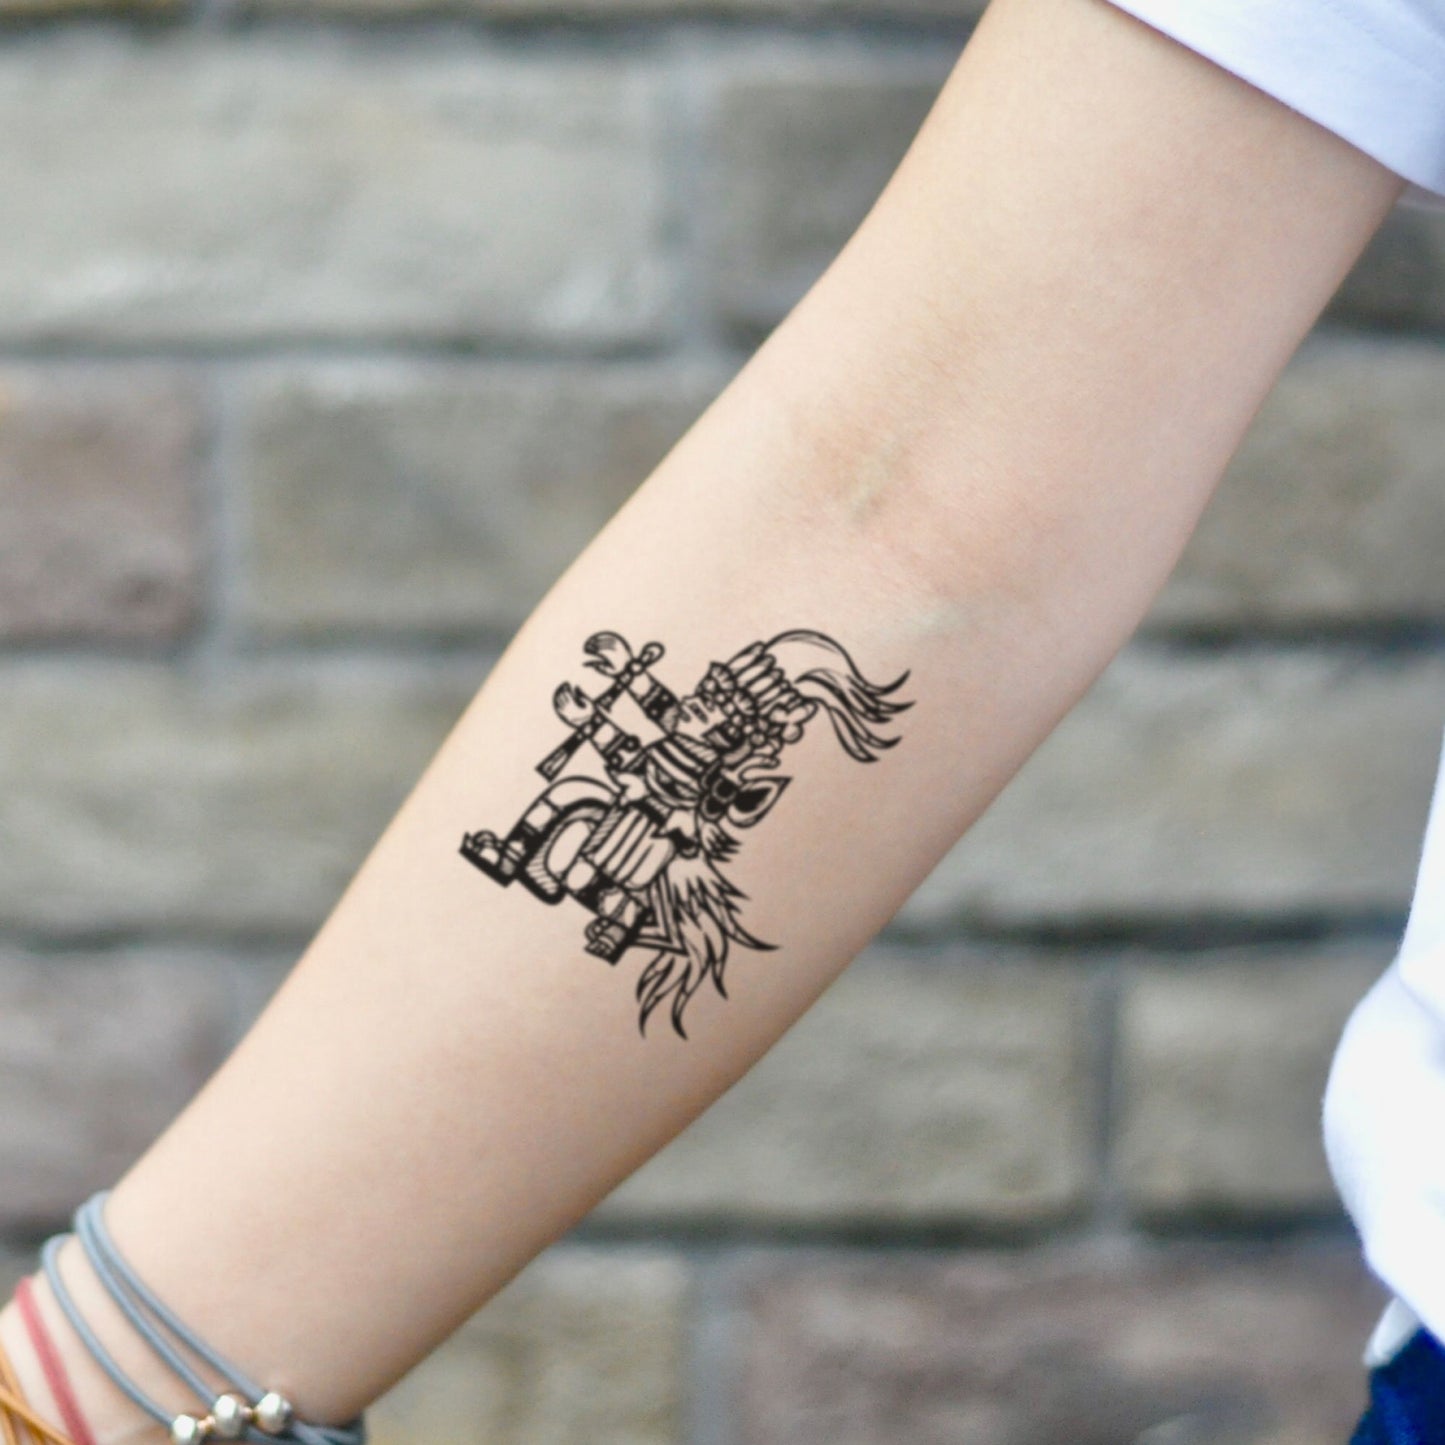 fake small huitzilopochtli aztec god illustrative temporary tattoo sticker design idea on inner arm